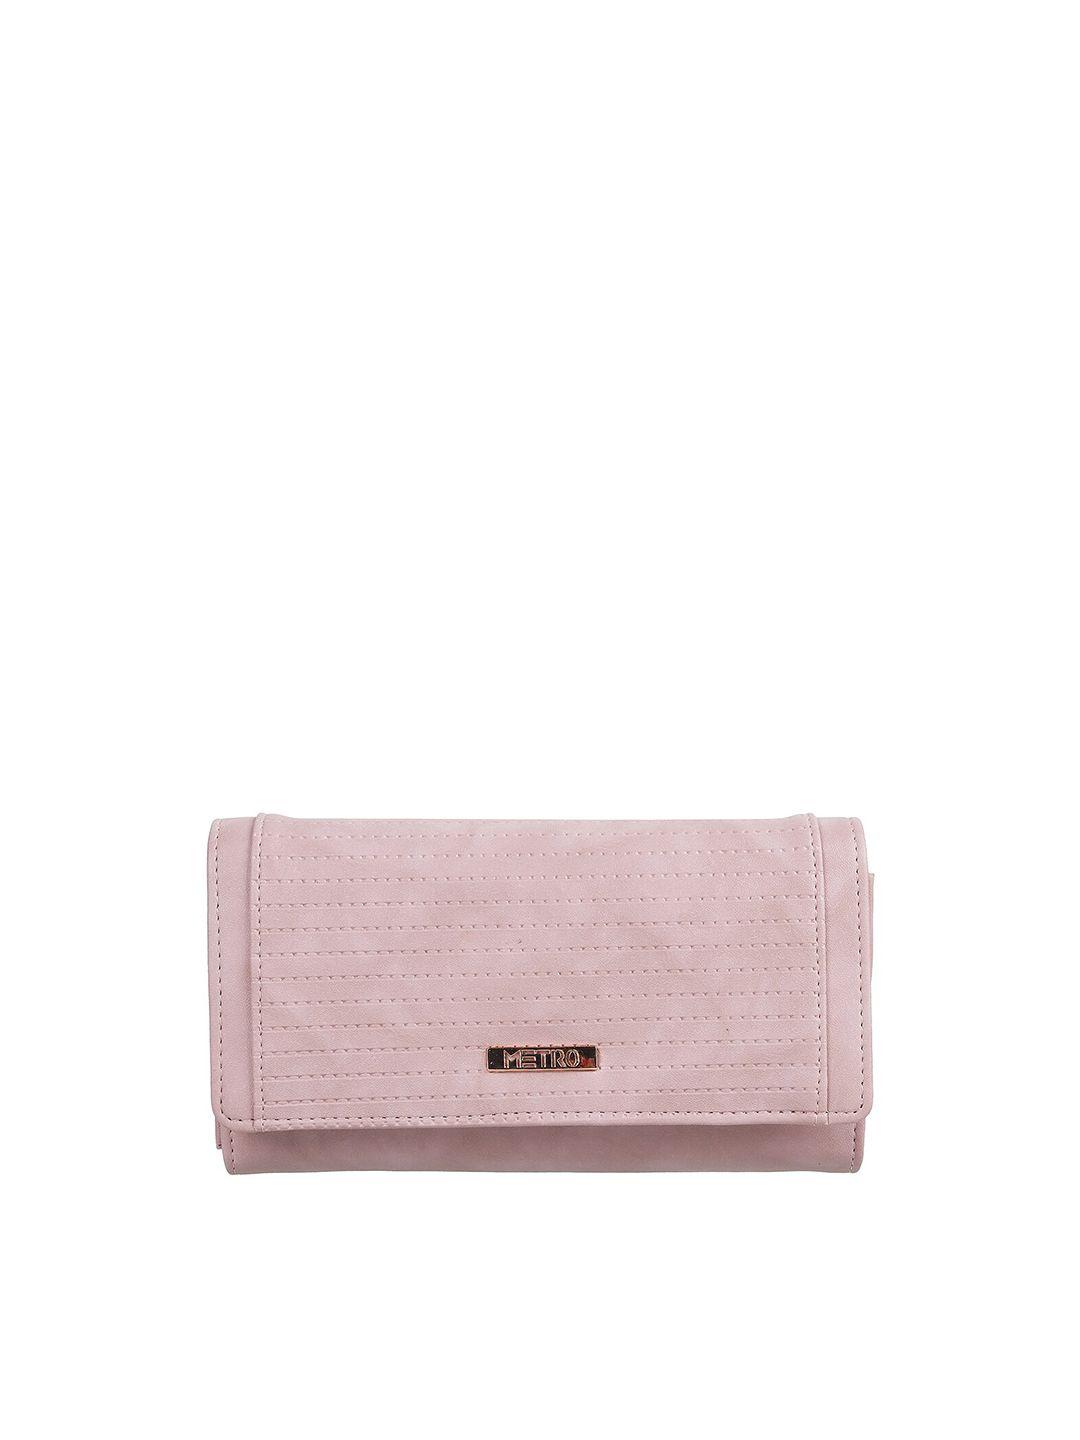 metro women peach-coloured purse clutch